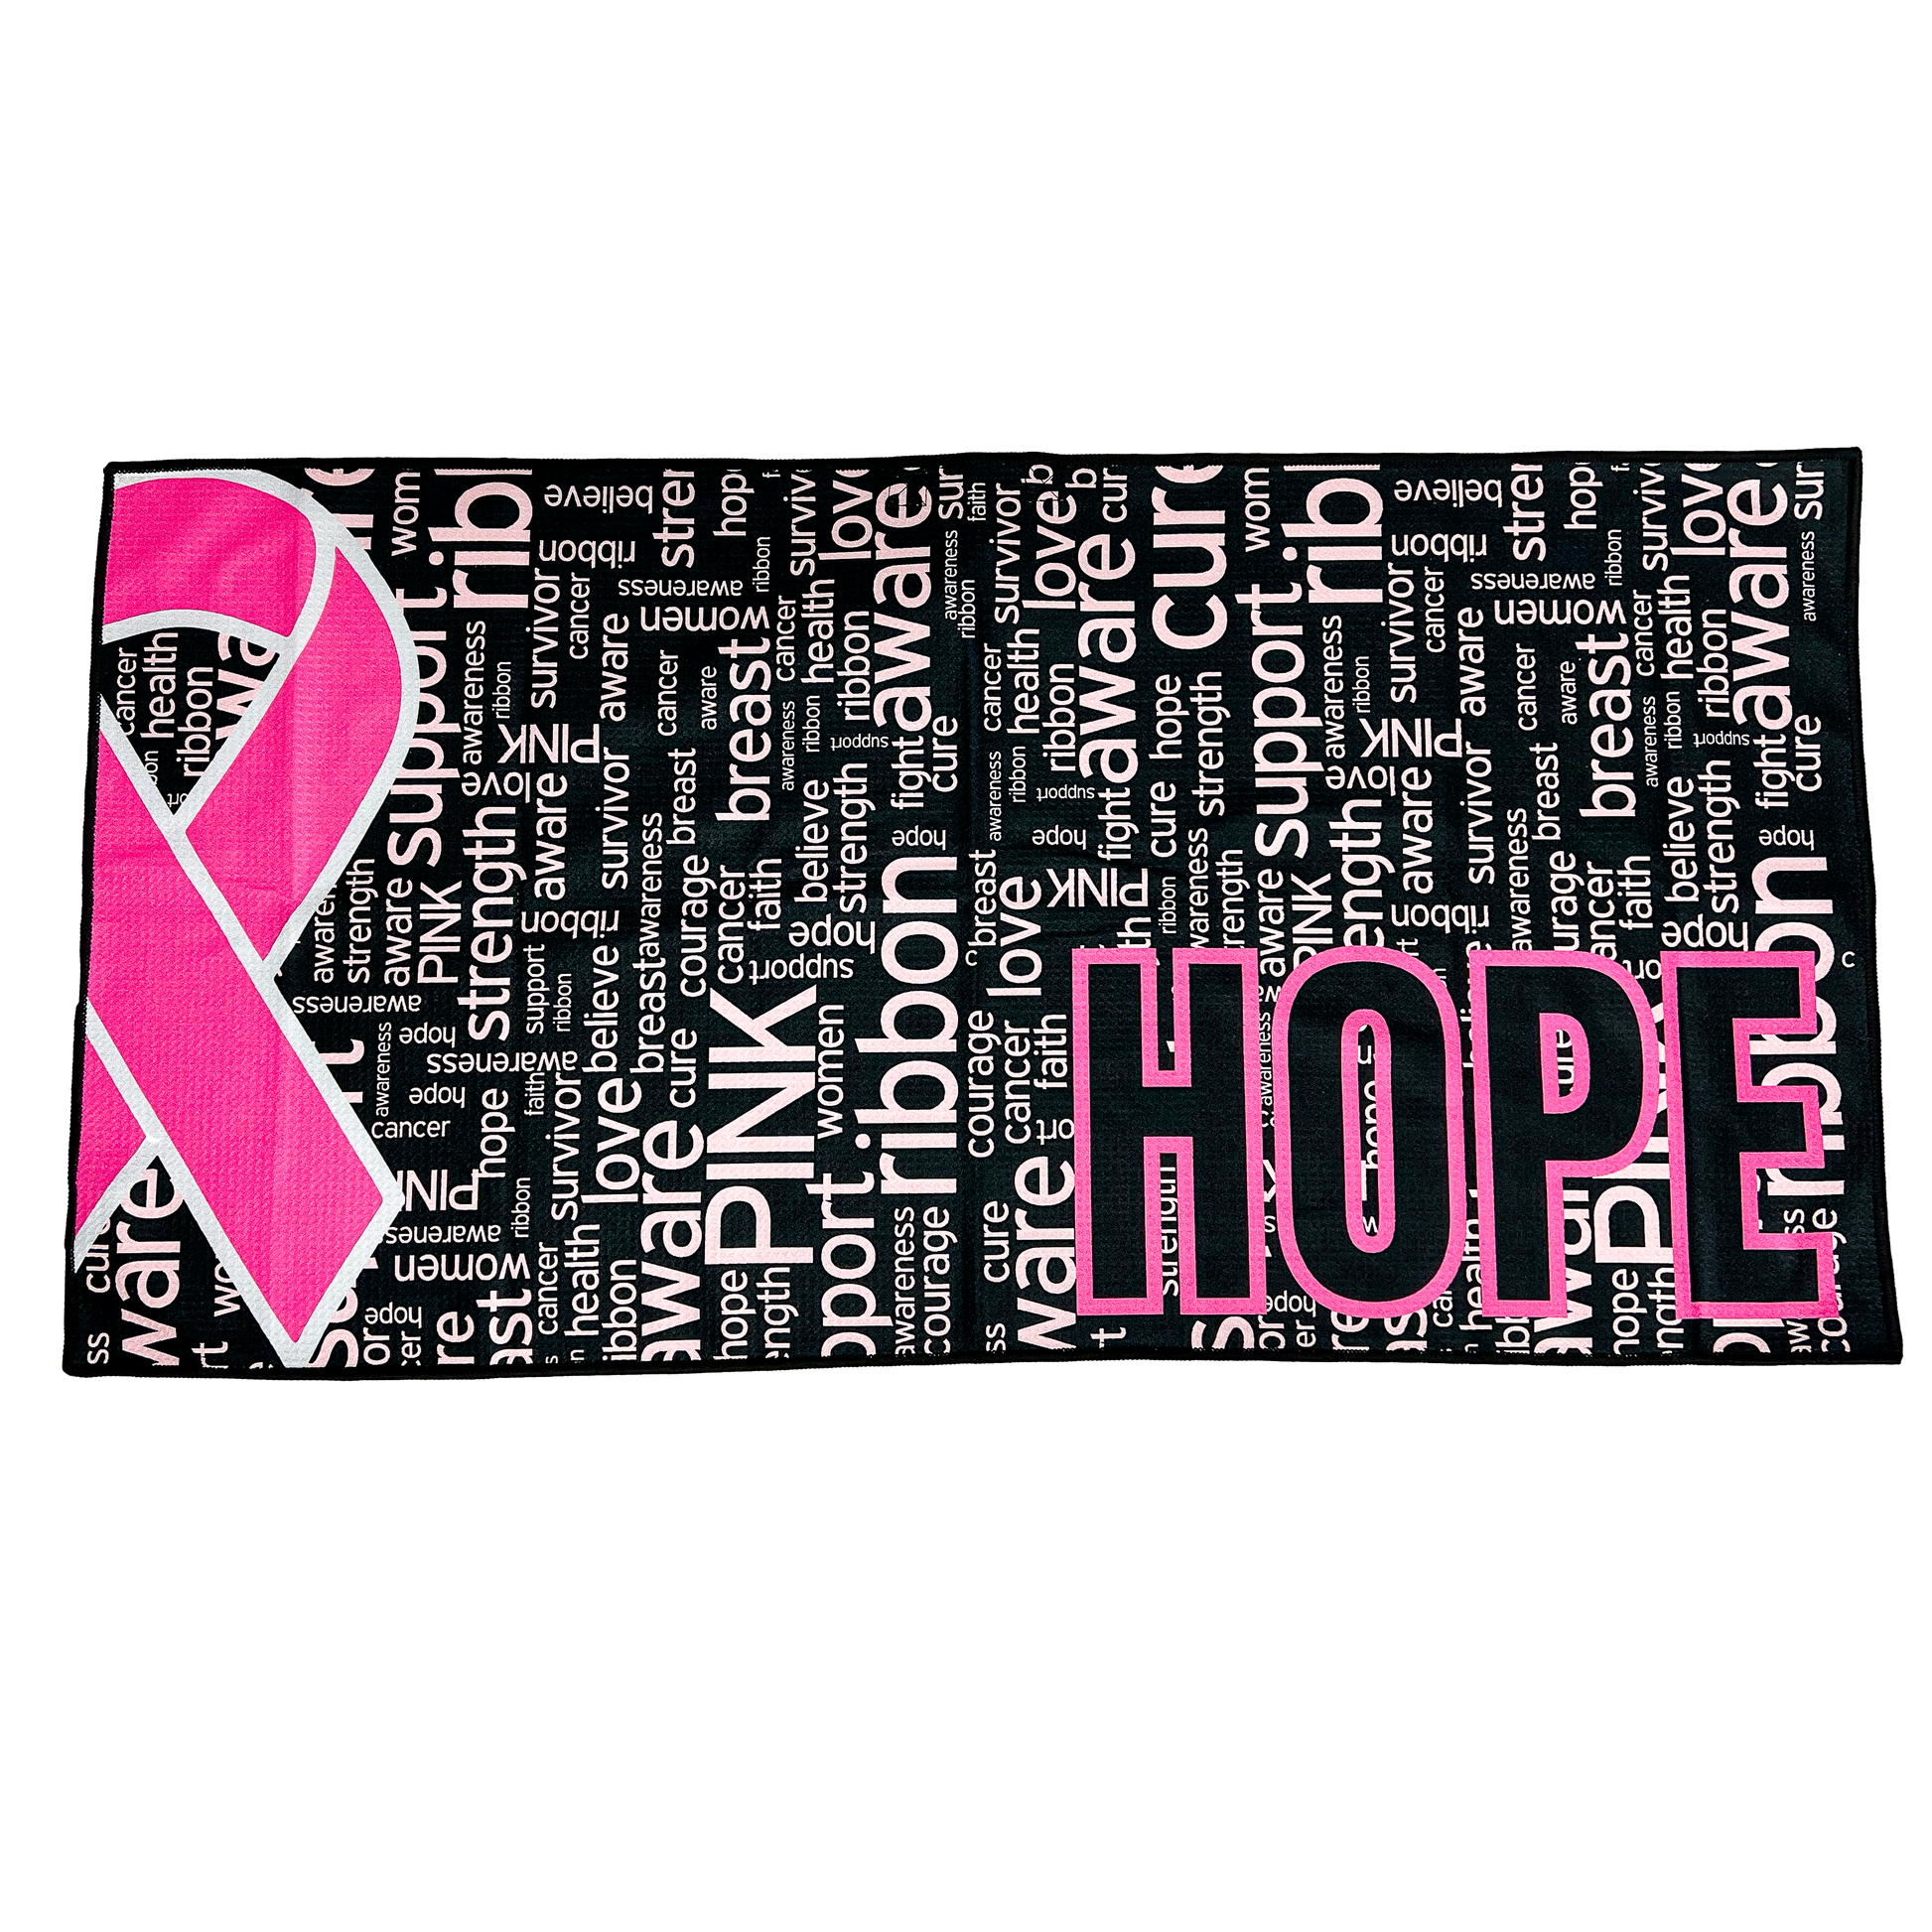 create a breast cancer awareness word cloud